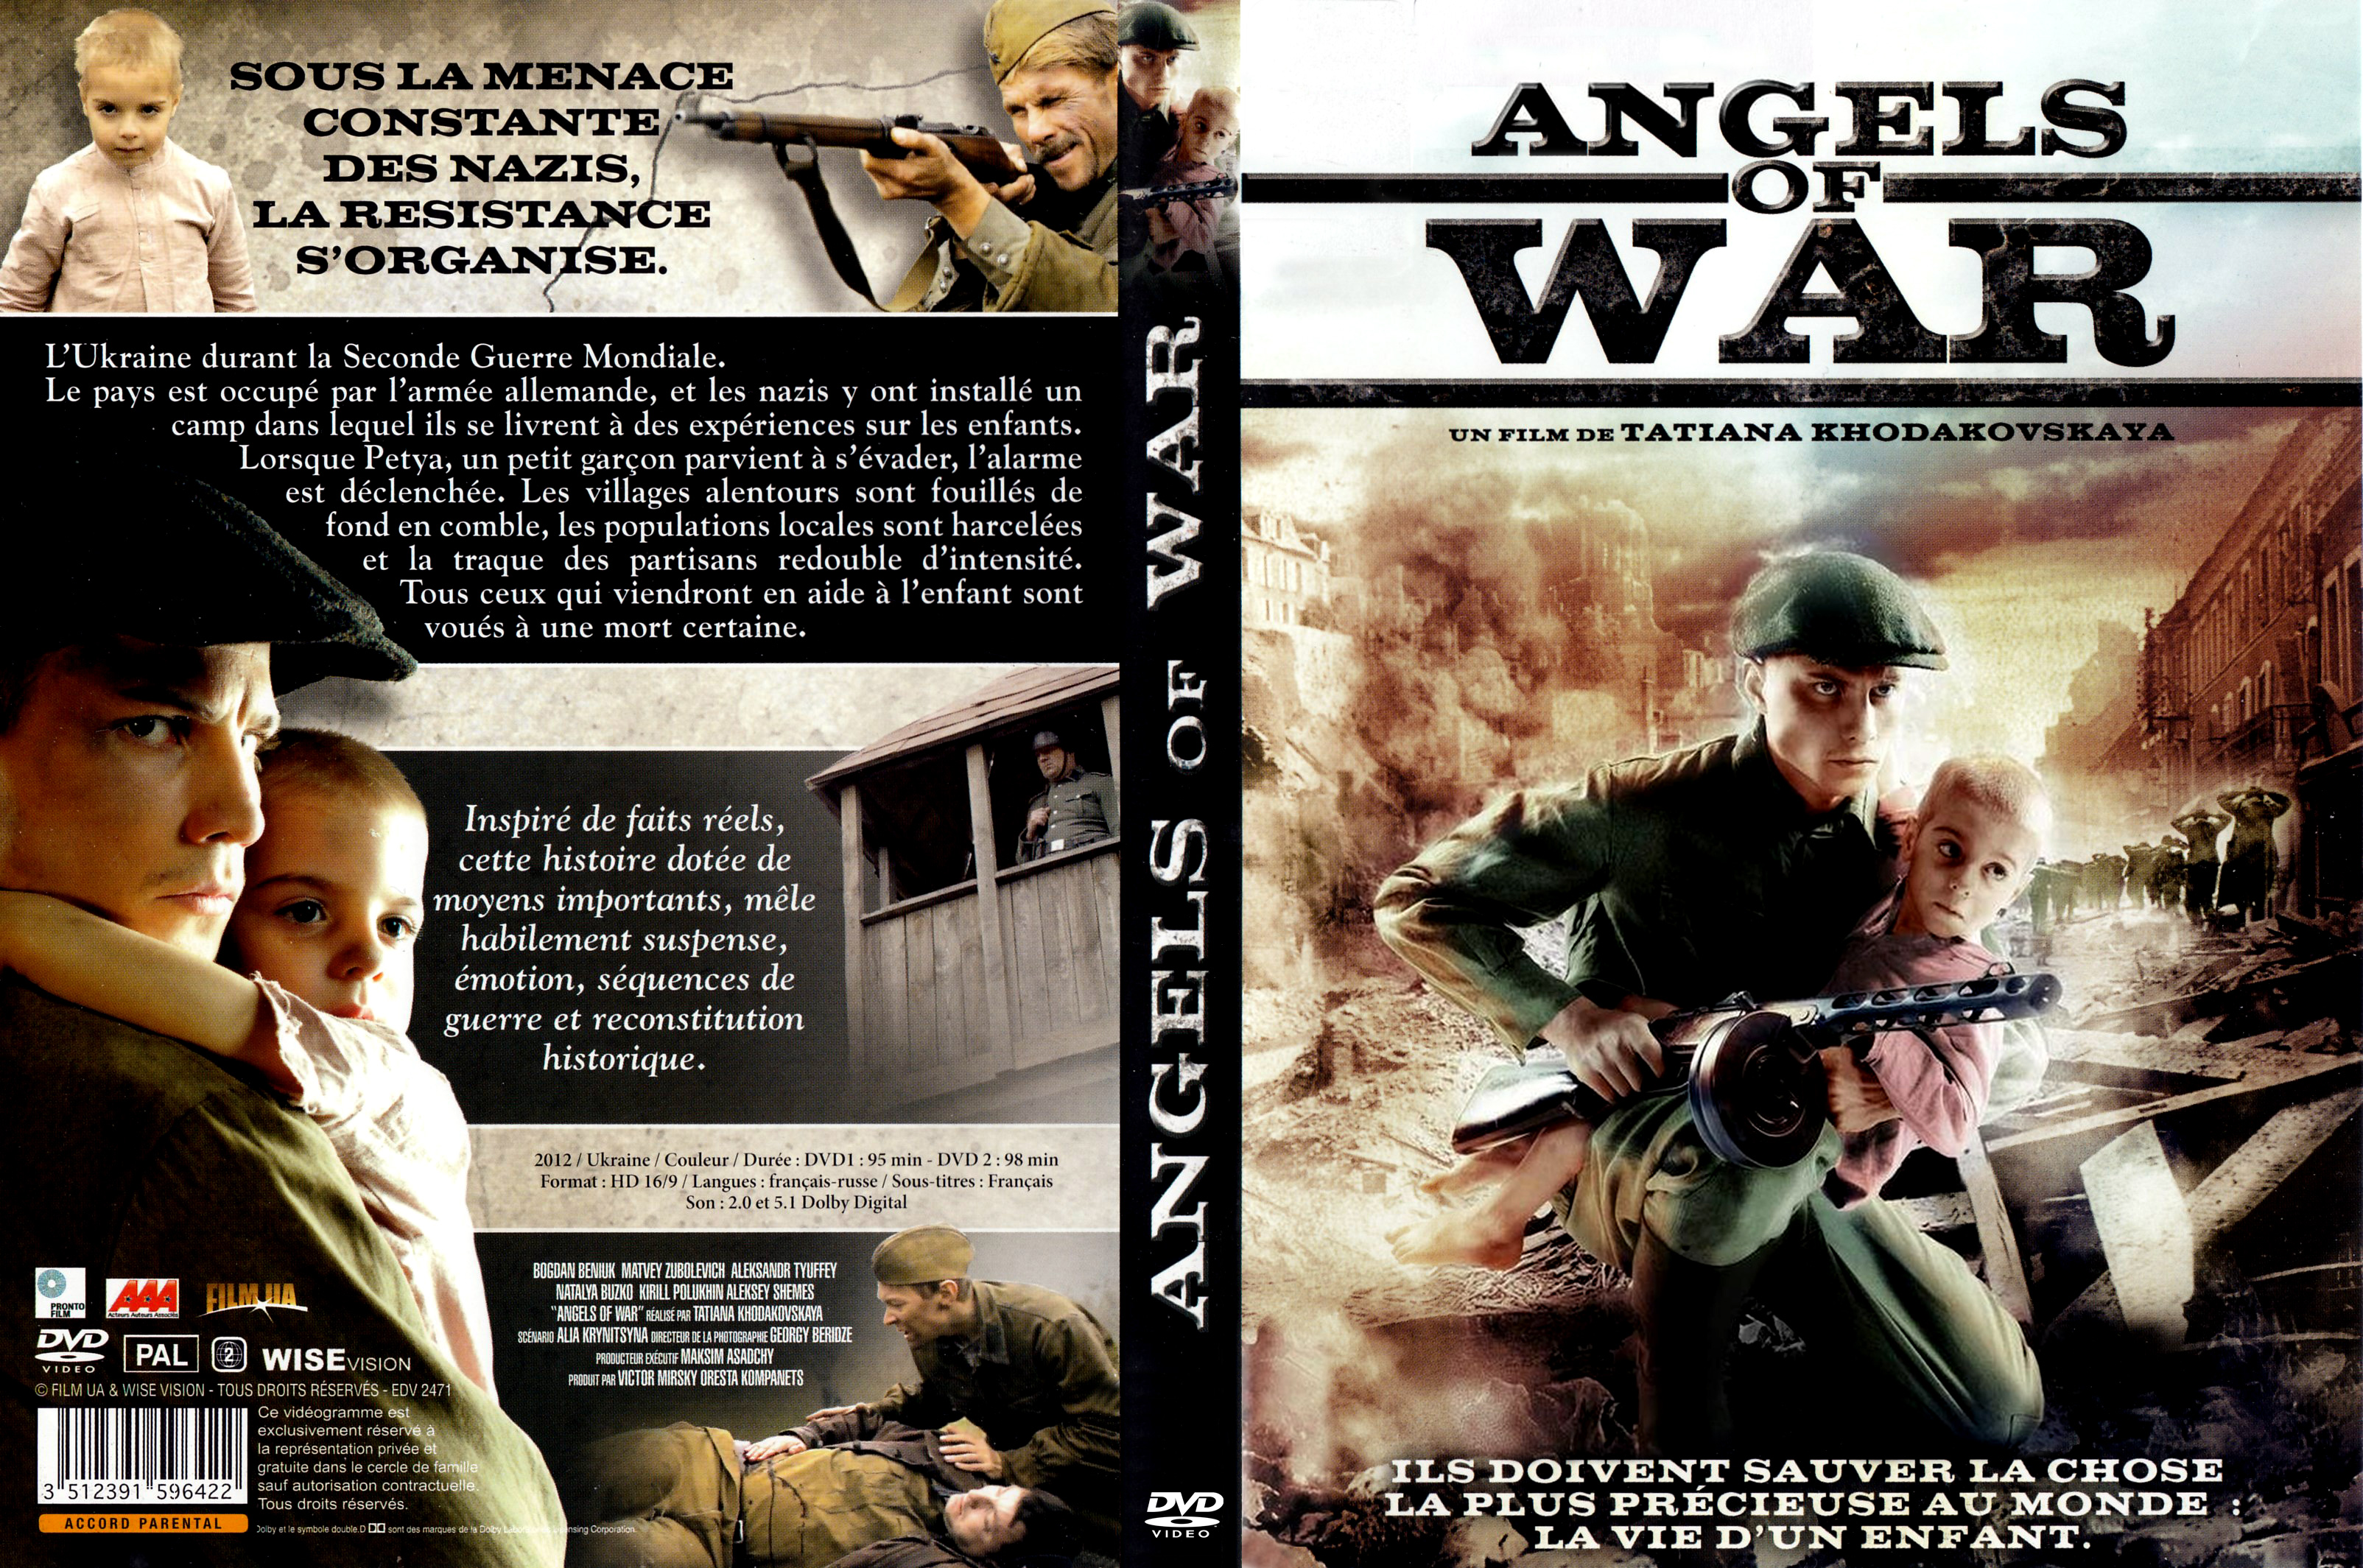 Jaquette DVD Angels of war